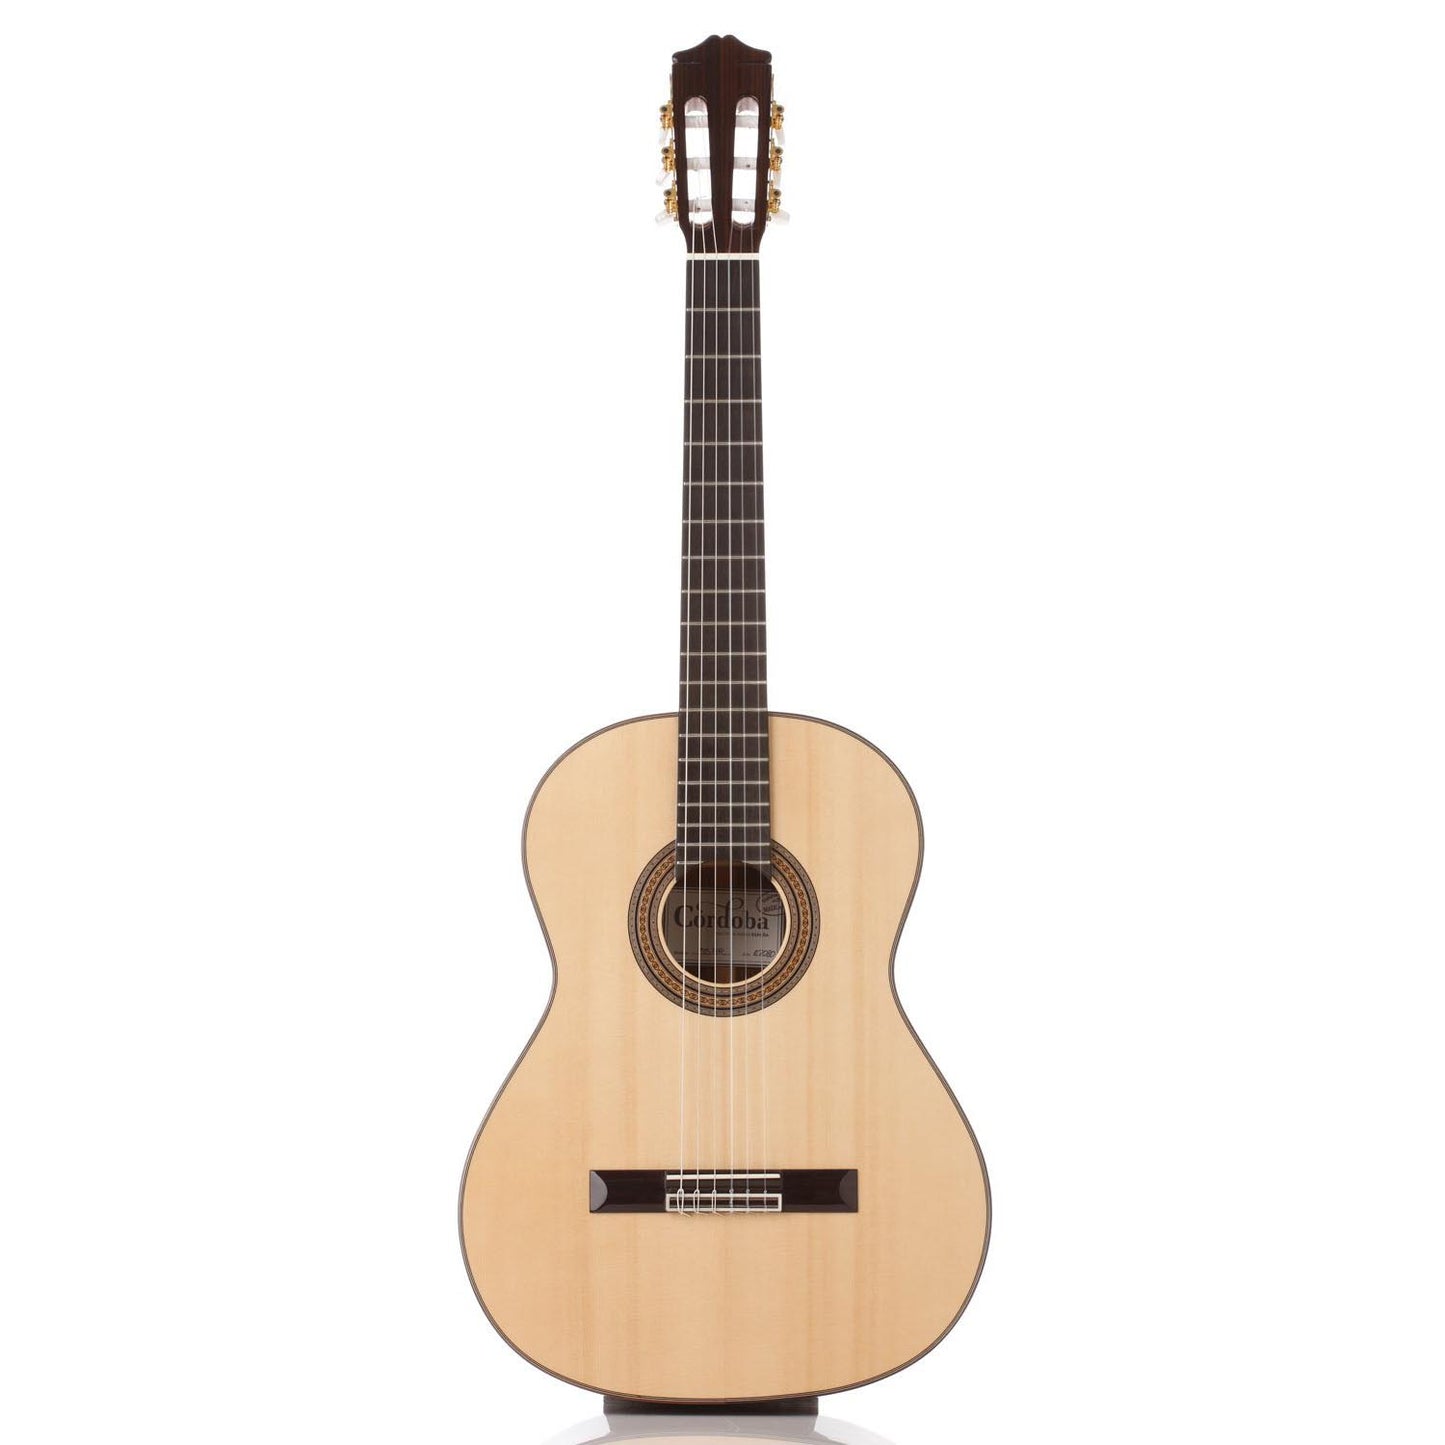 Cordoba 45co Espana Series Classical Guitar with Spruce Top